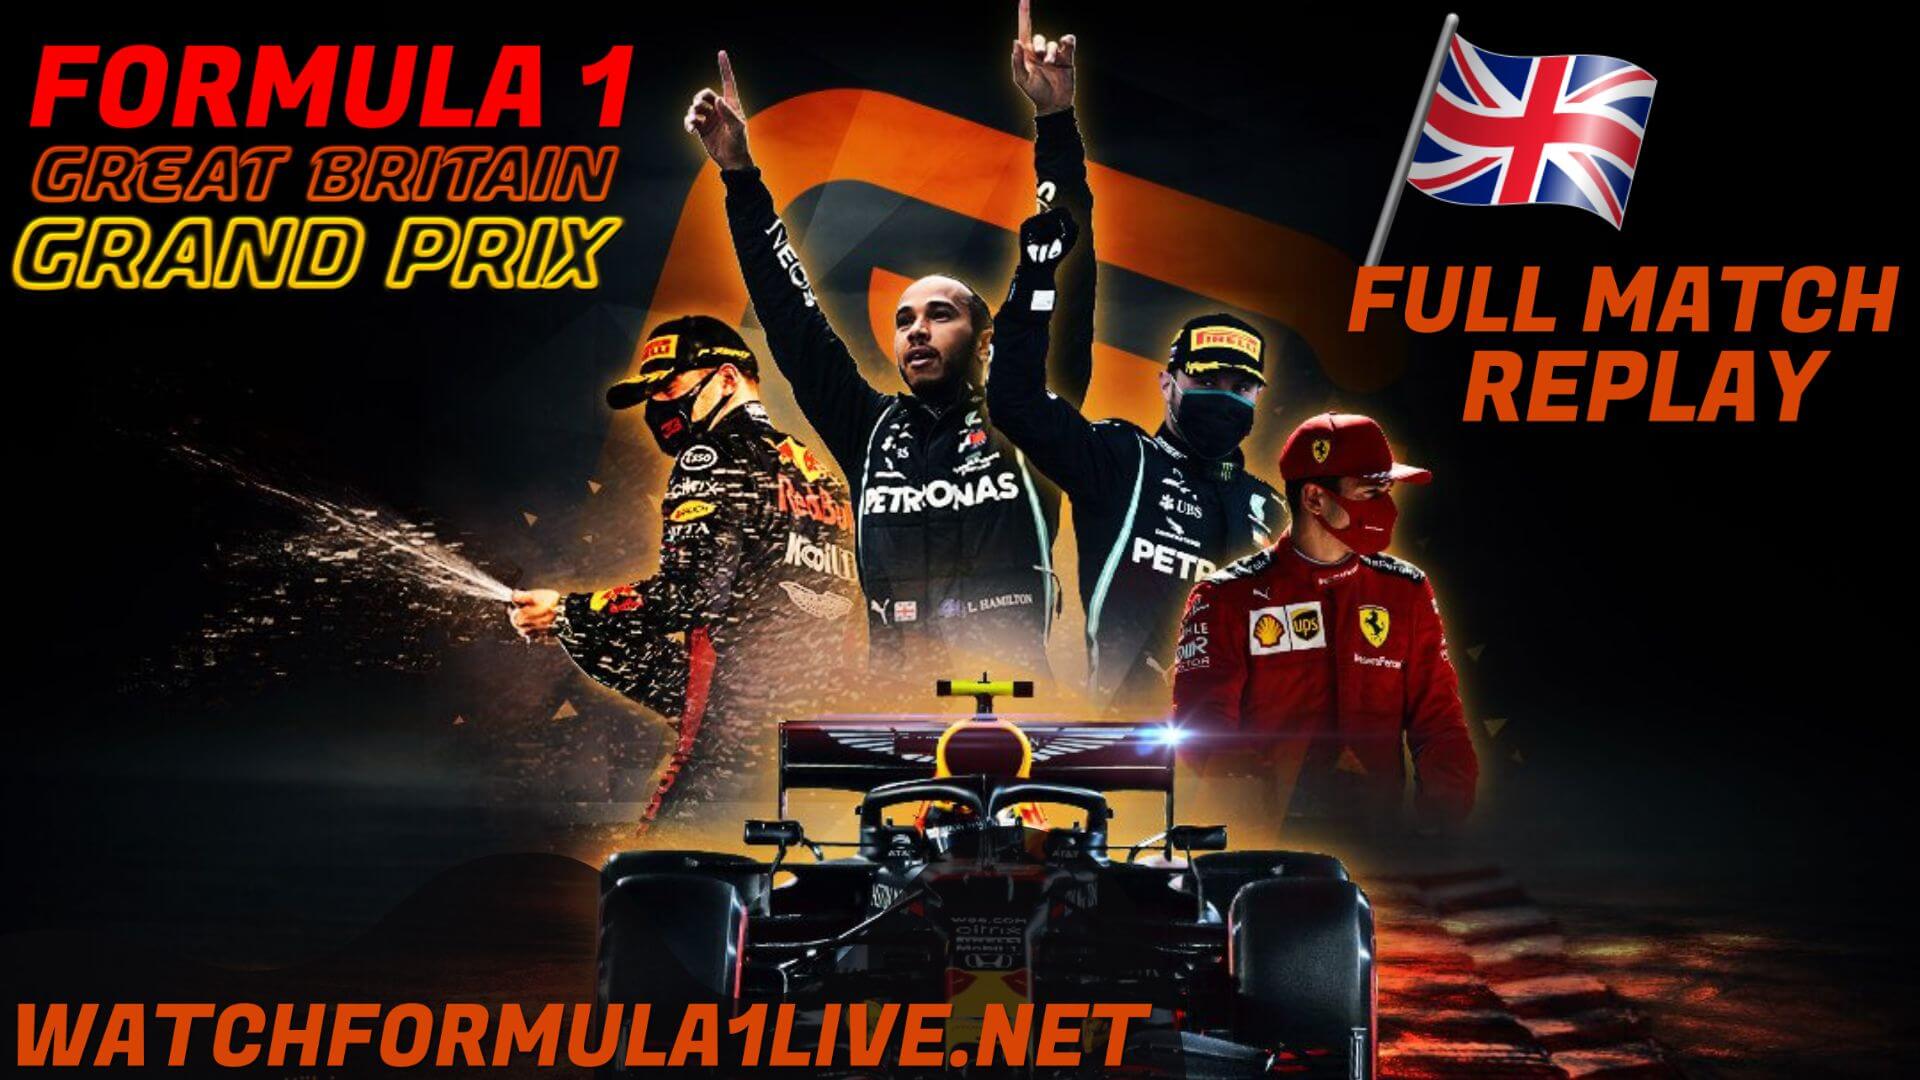 Formula 1 Great Britain Grand Prix Live Stream